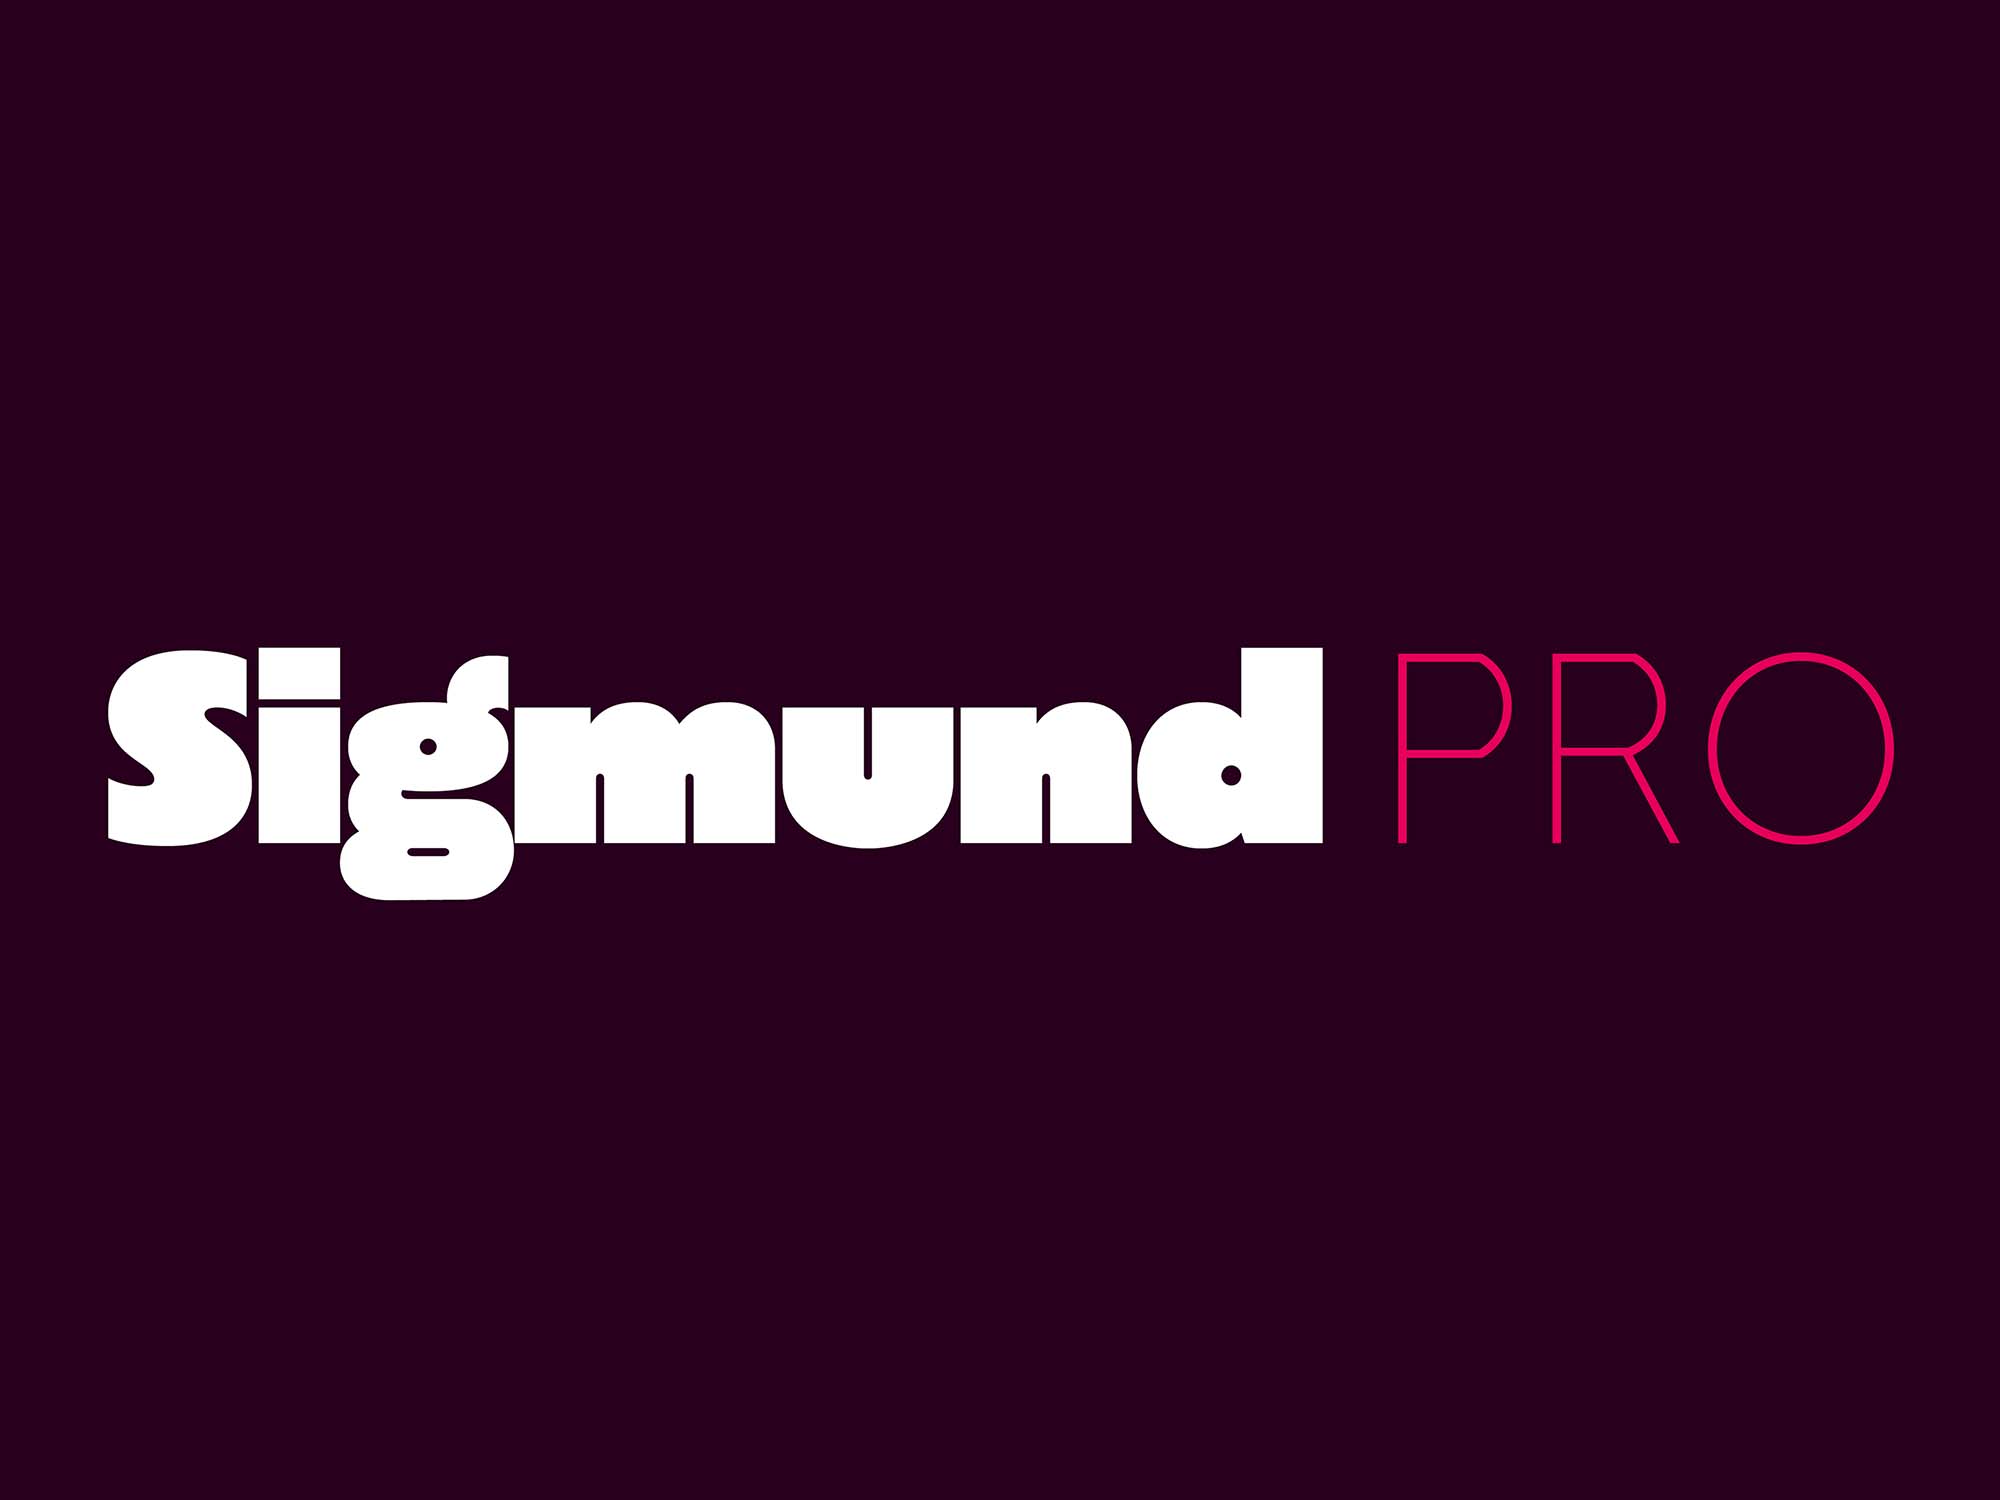 Sigmund Pro Sans Serif Font